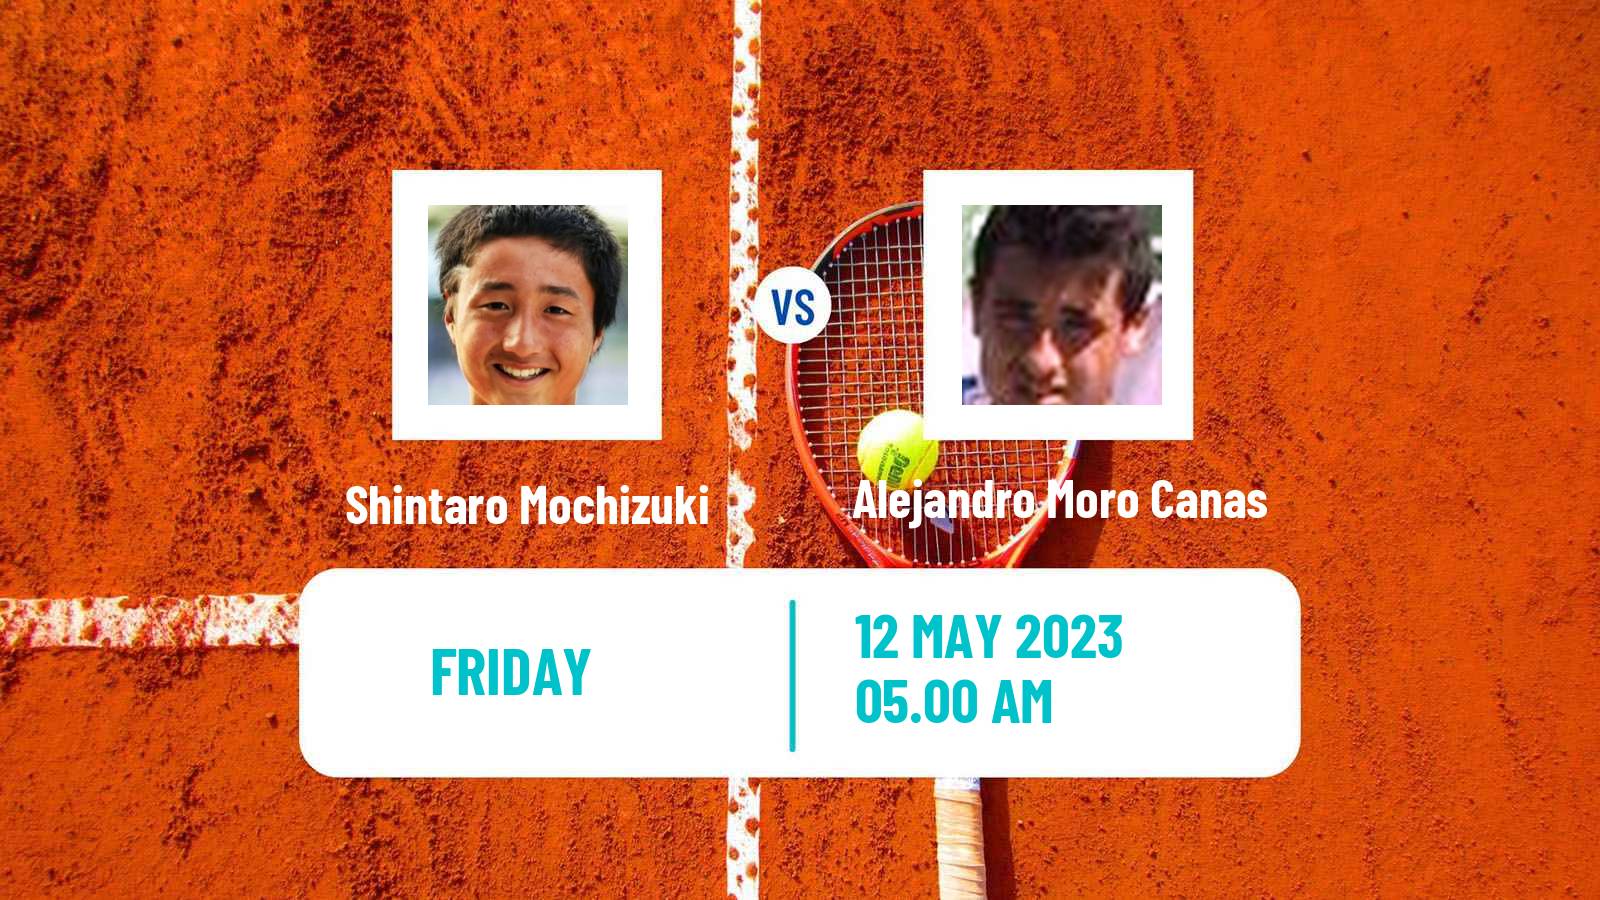 Tennis ATP Challenger Shintaro Mochizuki - Alejandro Moro Canas